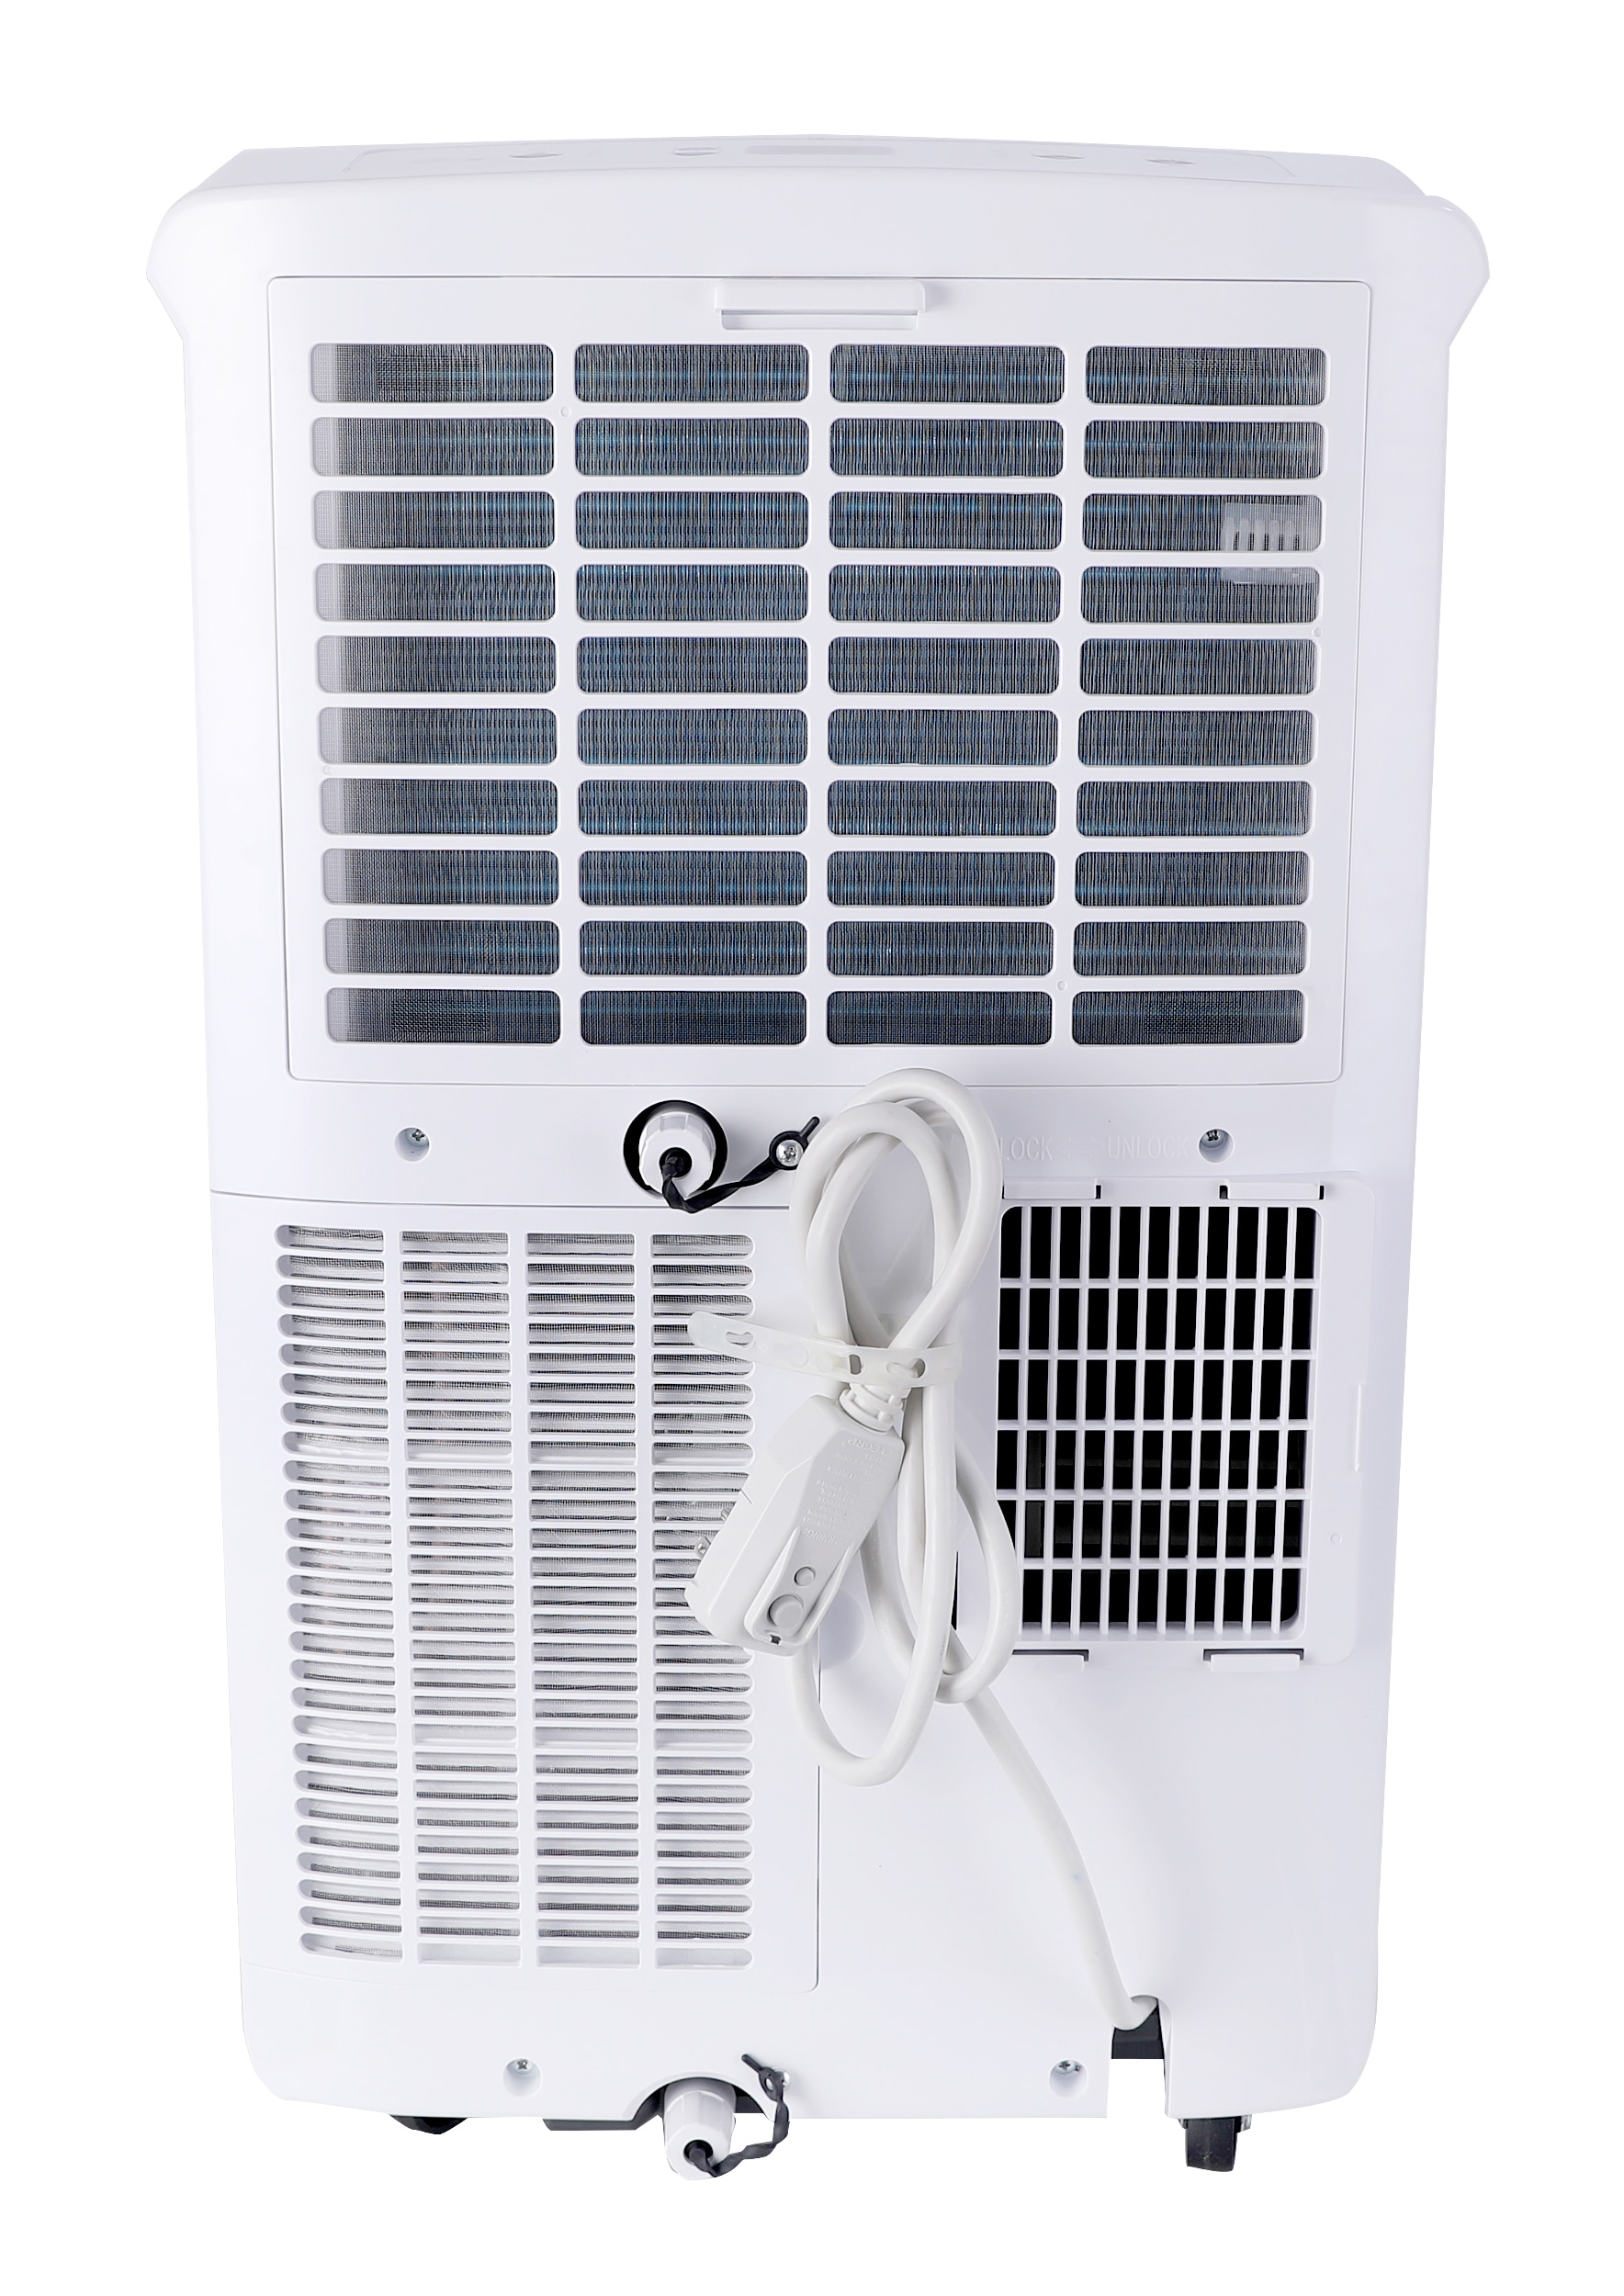 AeonAir Rpac08ee Portable 8000 BTU Air Conditioner for sale online